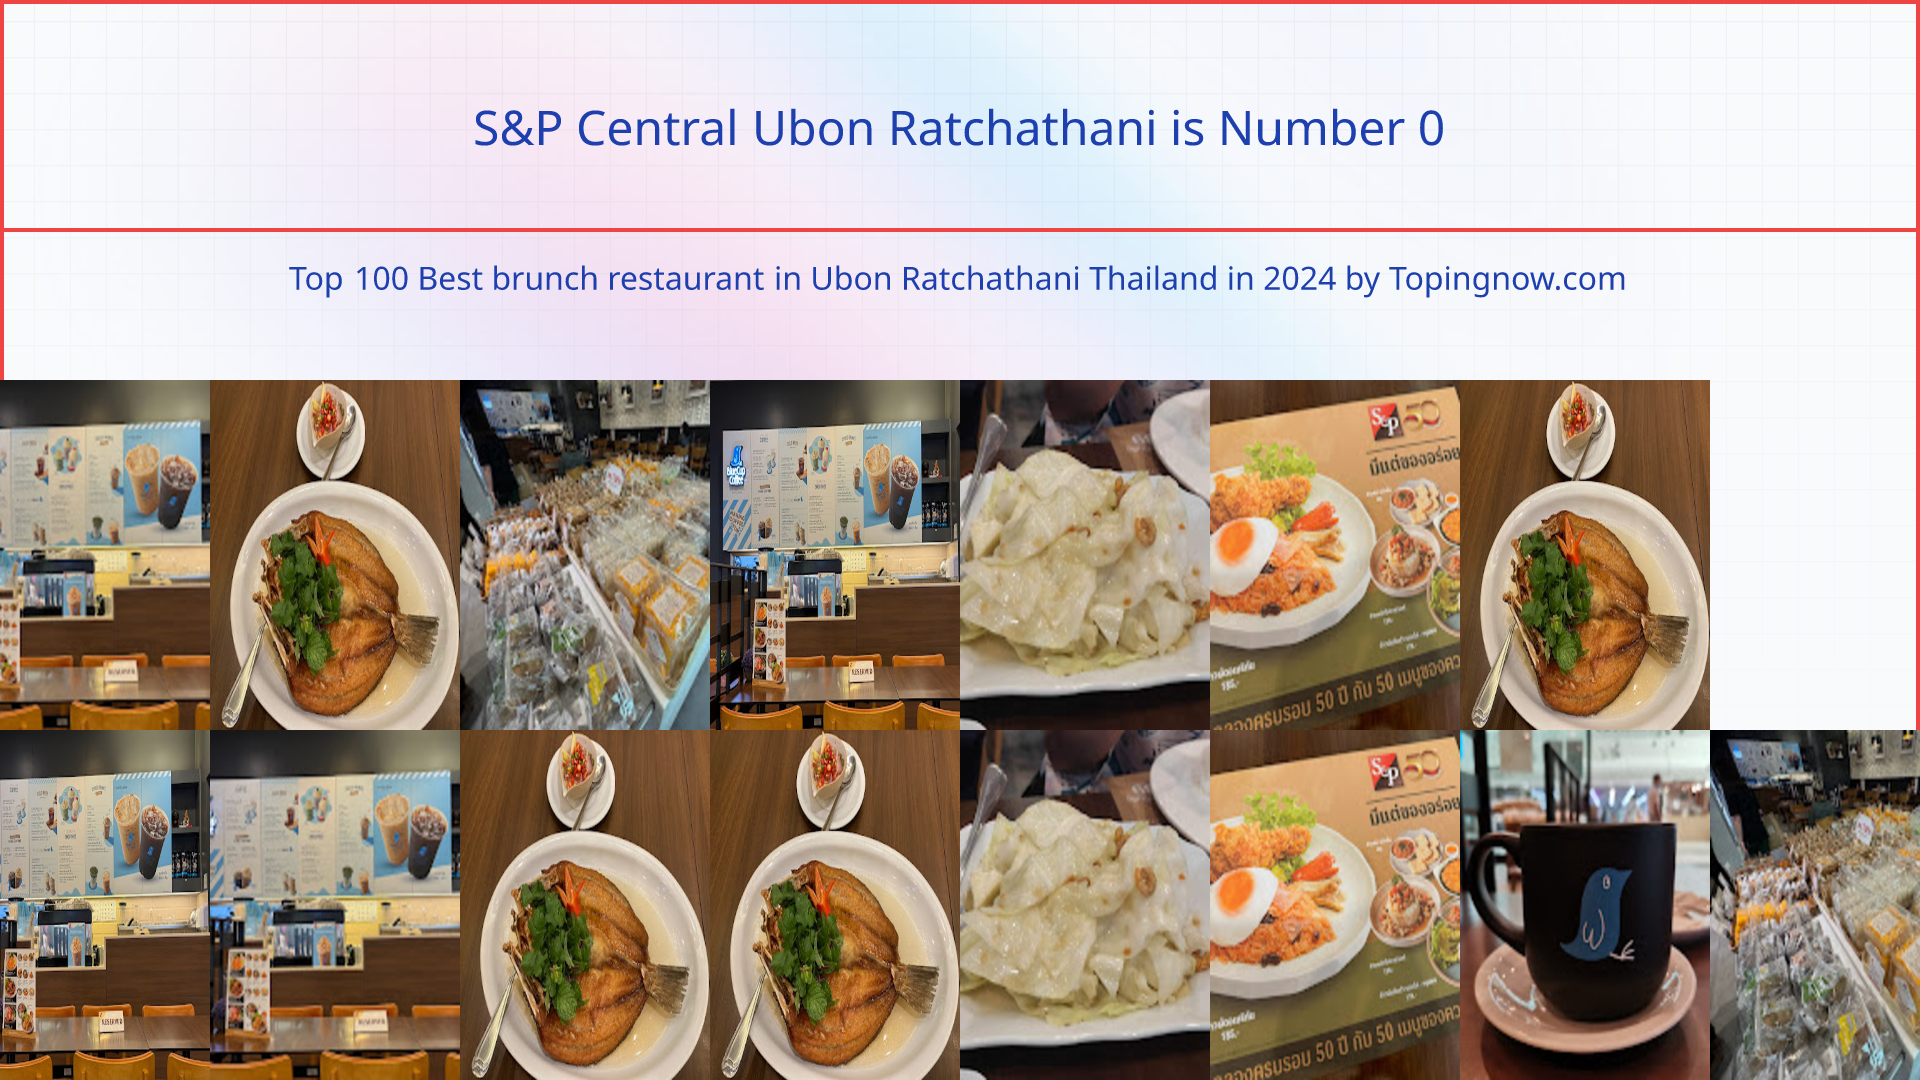 S&P Central Ubon Ratchathani: Top 100 Best brunch restaurant in Ubon Ratchathani Thailand in 2024